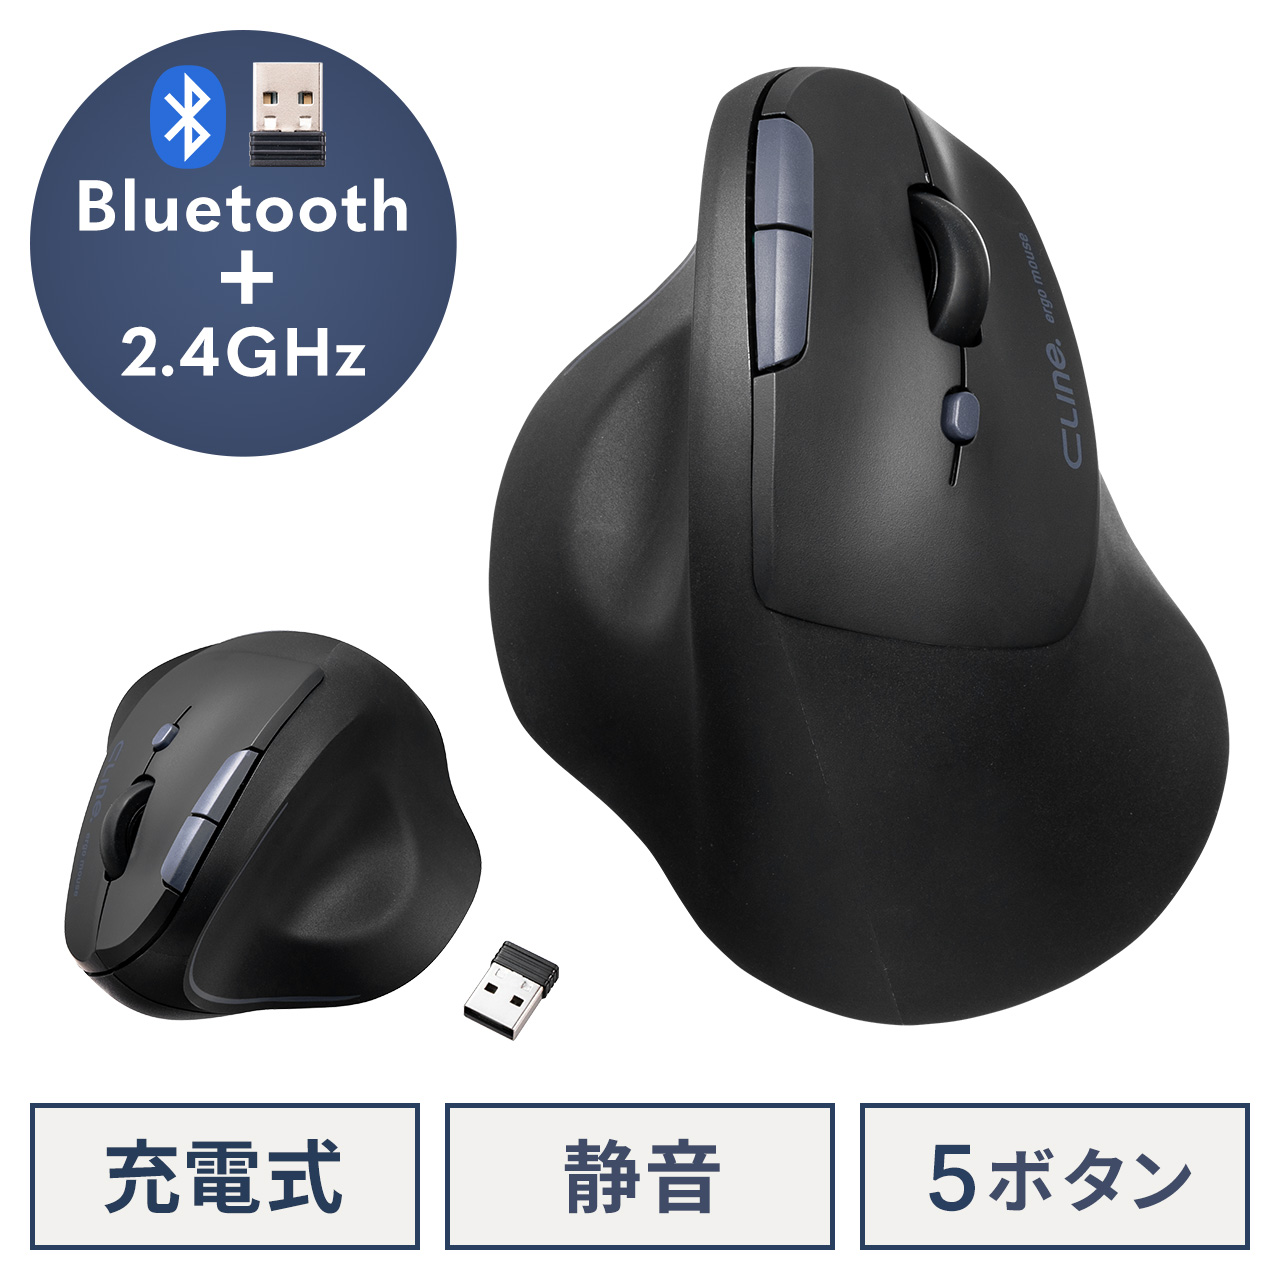 Bluetooth5.2新登場 ワイヤレスマウス 静音 無線 光学式 高精度 Bluetooth&2.4GHz 2台同時接続 6ボタン 戻る